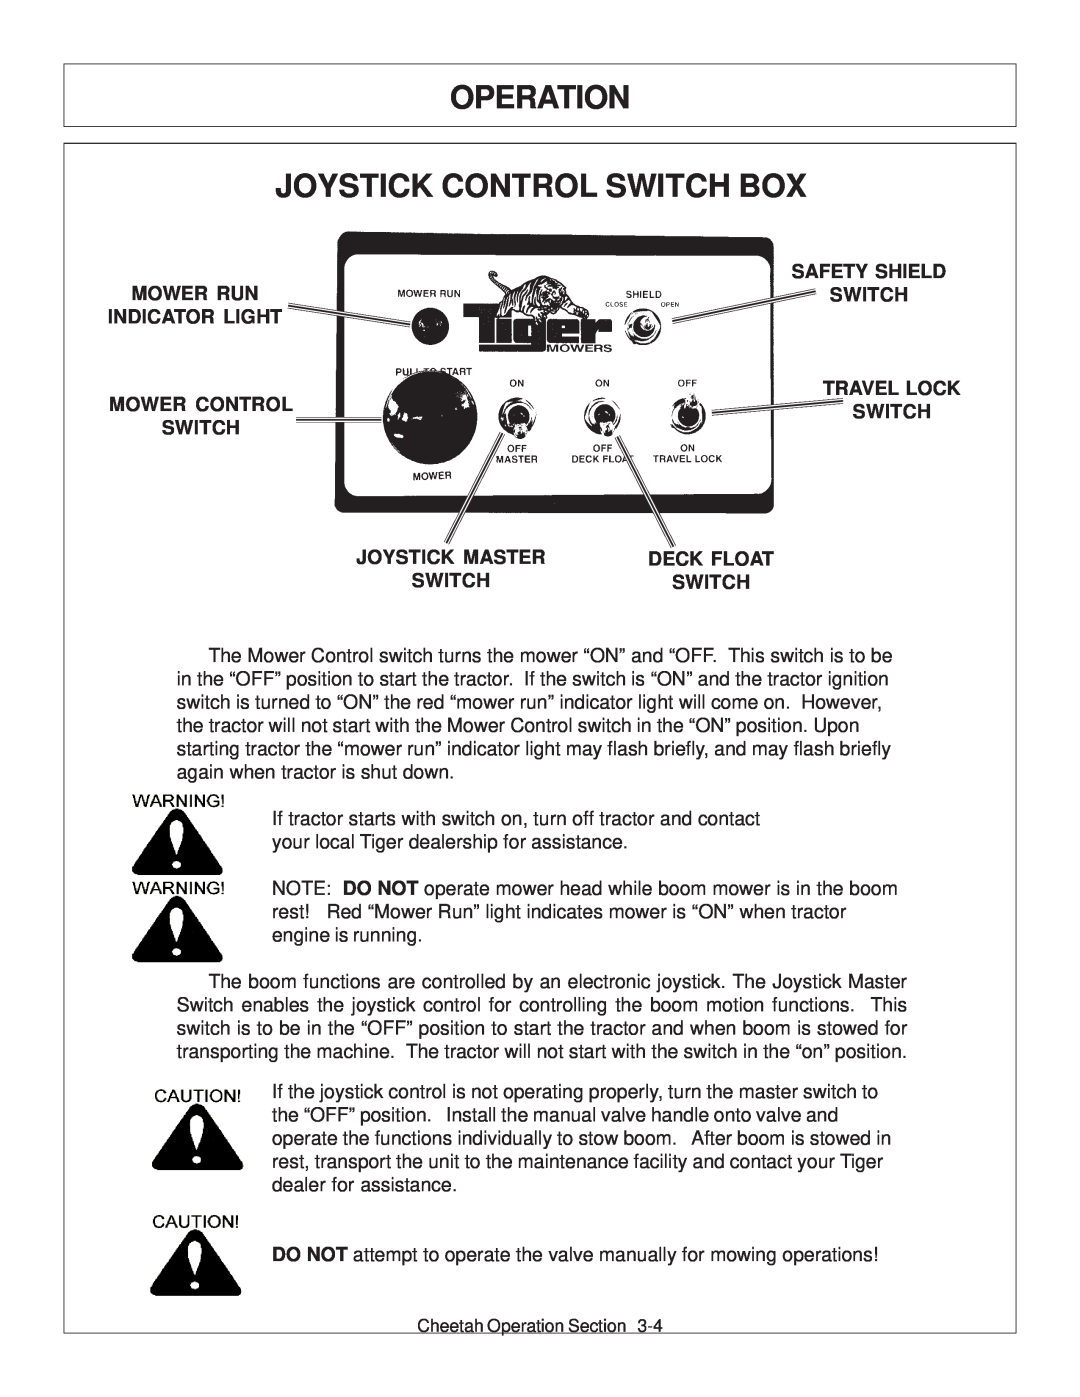 Tiger Products Co., Ltd JD 5083E manual Operation Joystick Control Switch Box, Mower Control Switch Switch, Joystick Master 